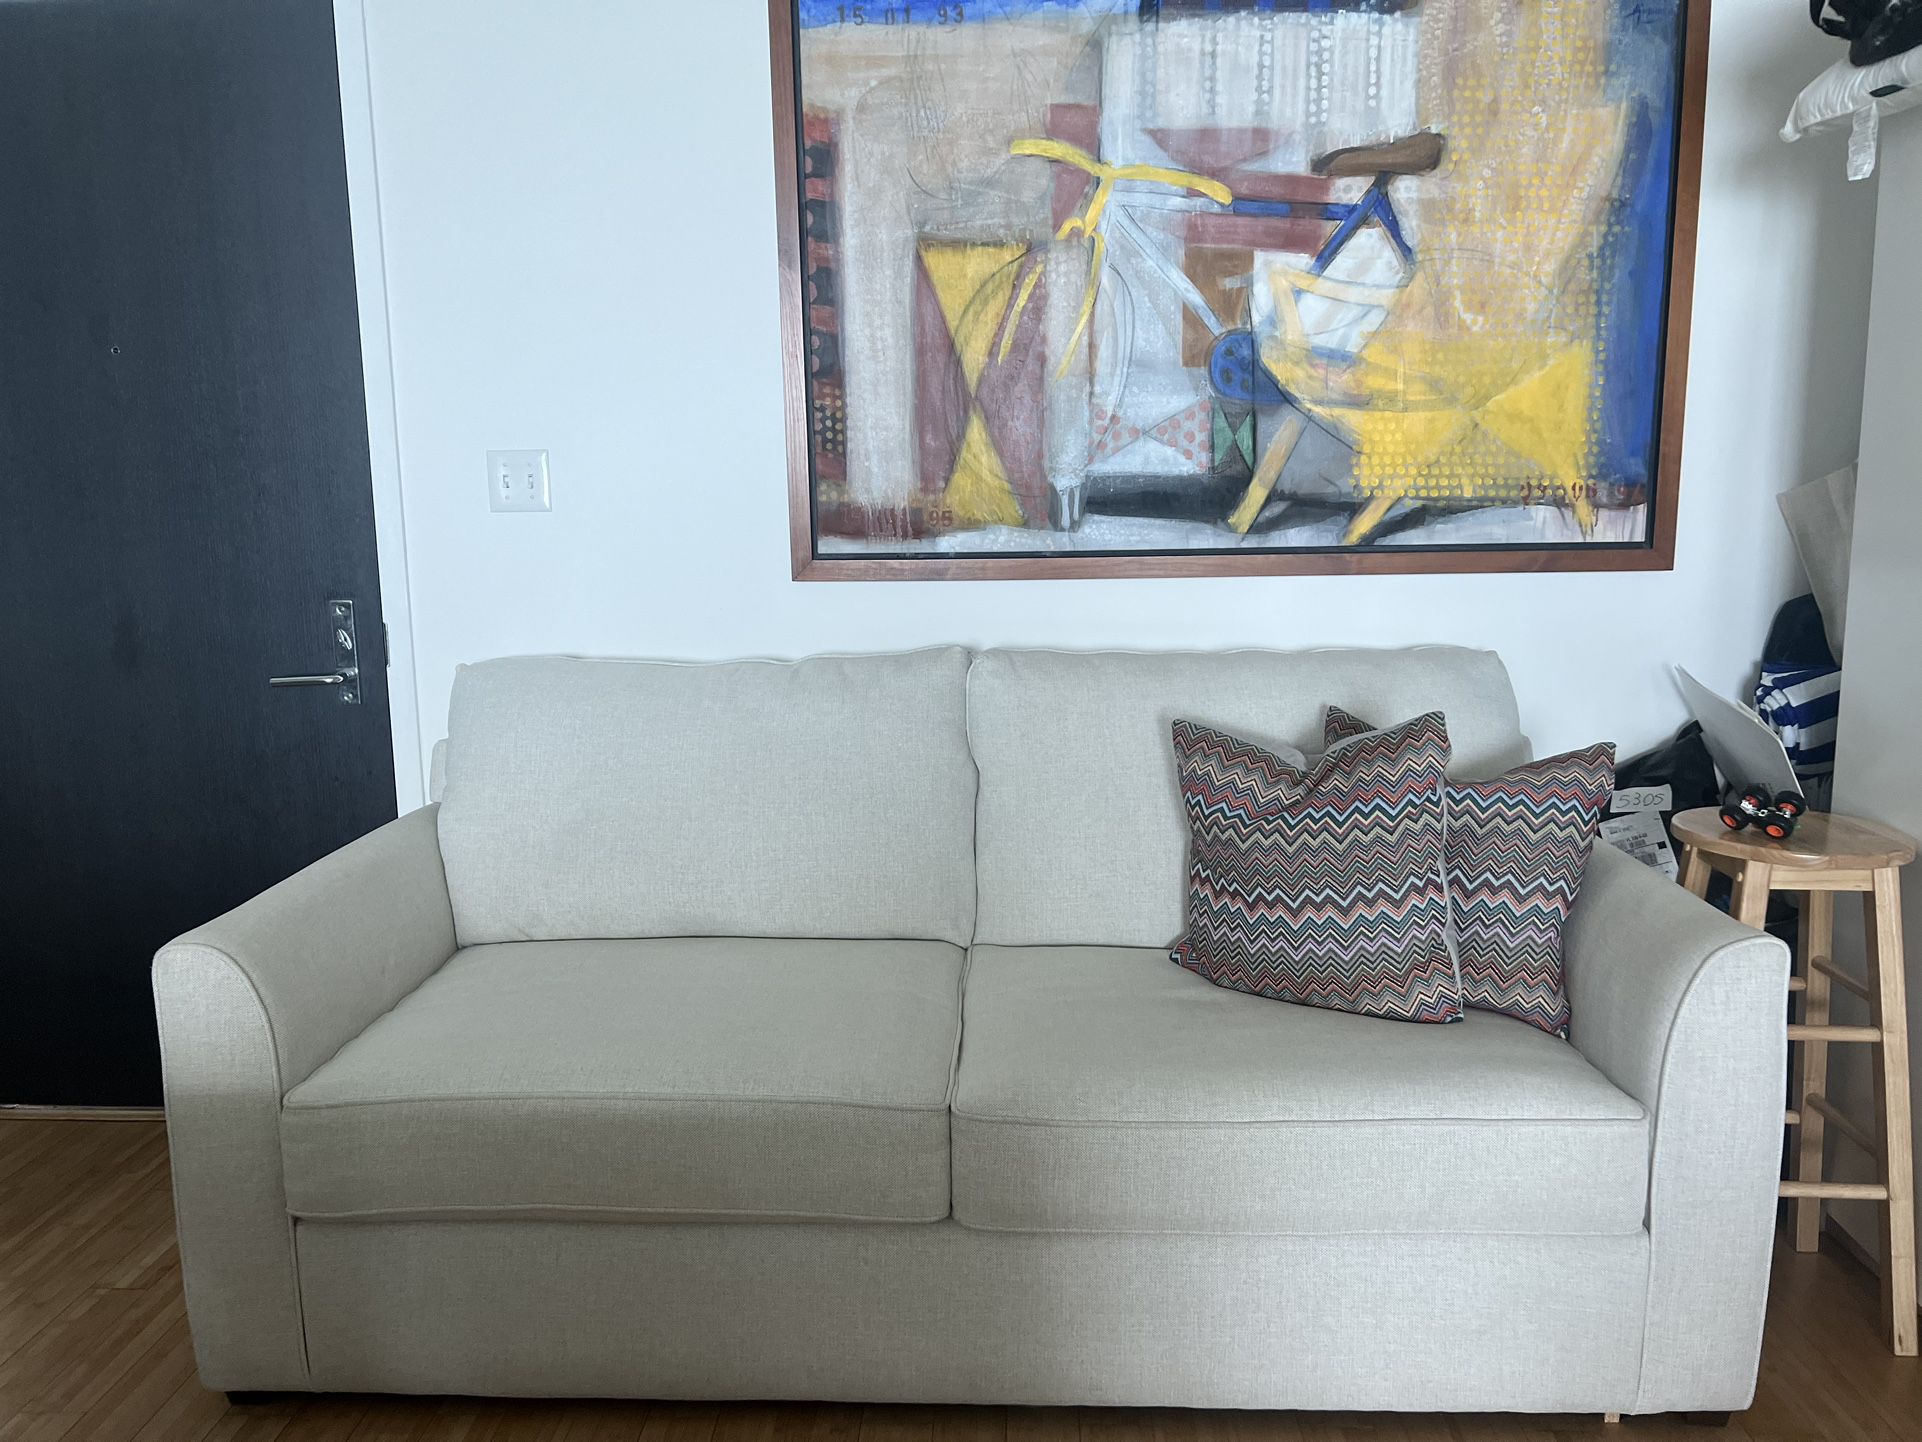 Sofa - bed 